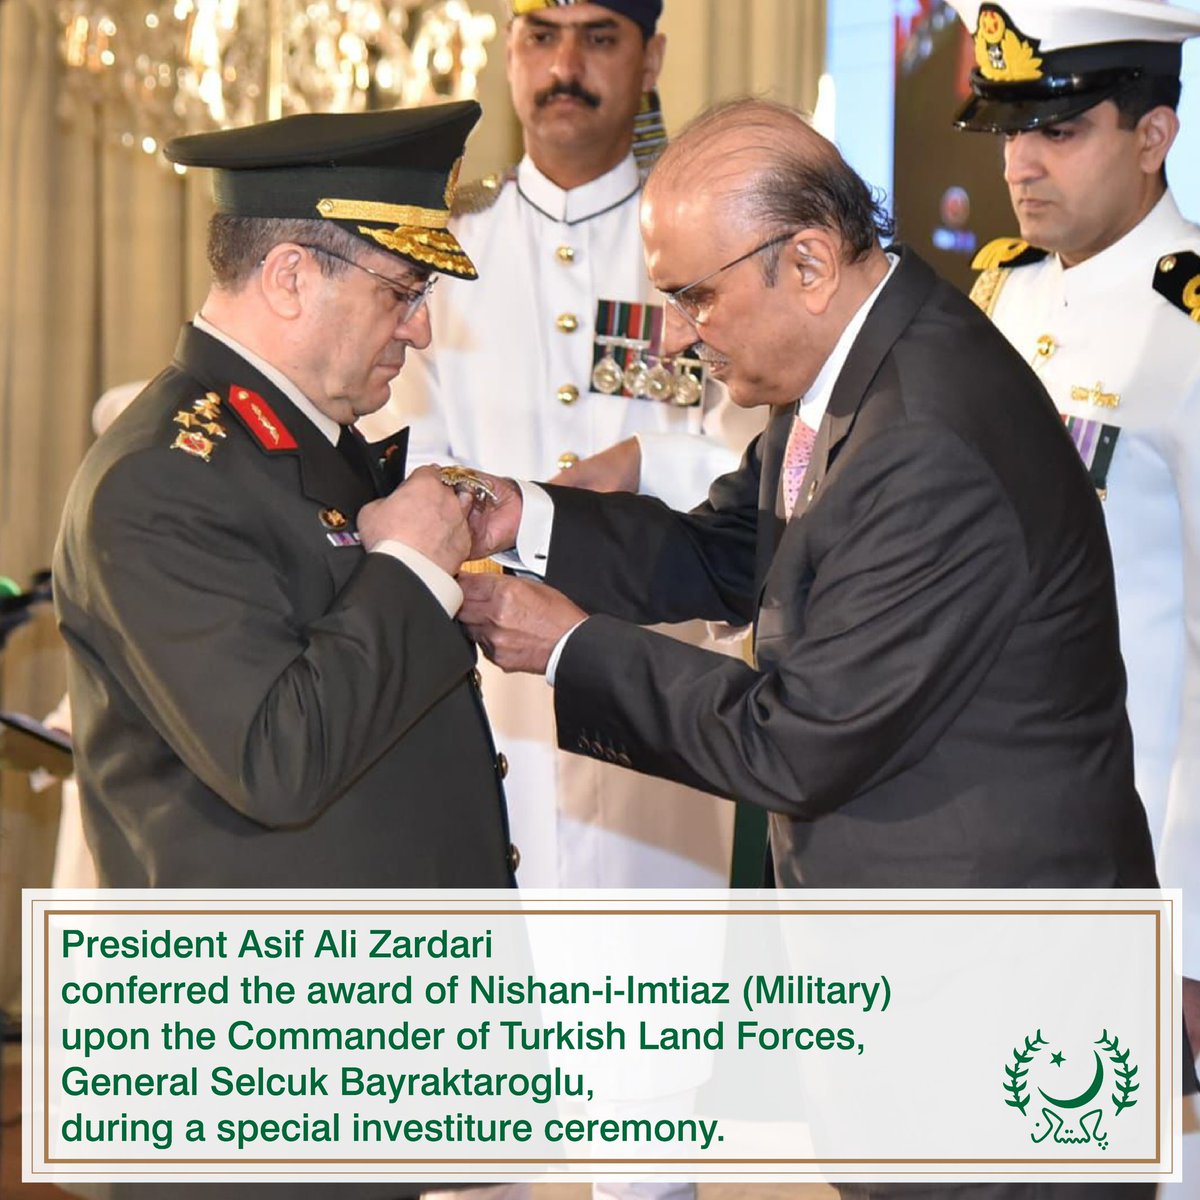 President Asif Ali Zardari conferred the award of Nishan-i-Imtiaz (Military) upon the Commander of Turkish Land Forces, General Selcuk Bayraktaroglu.